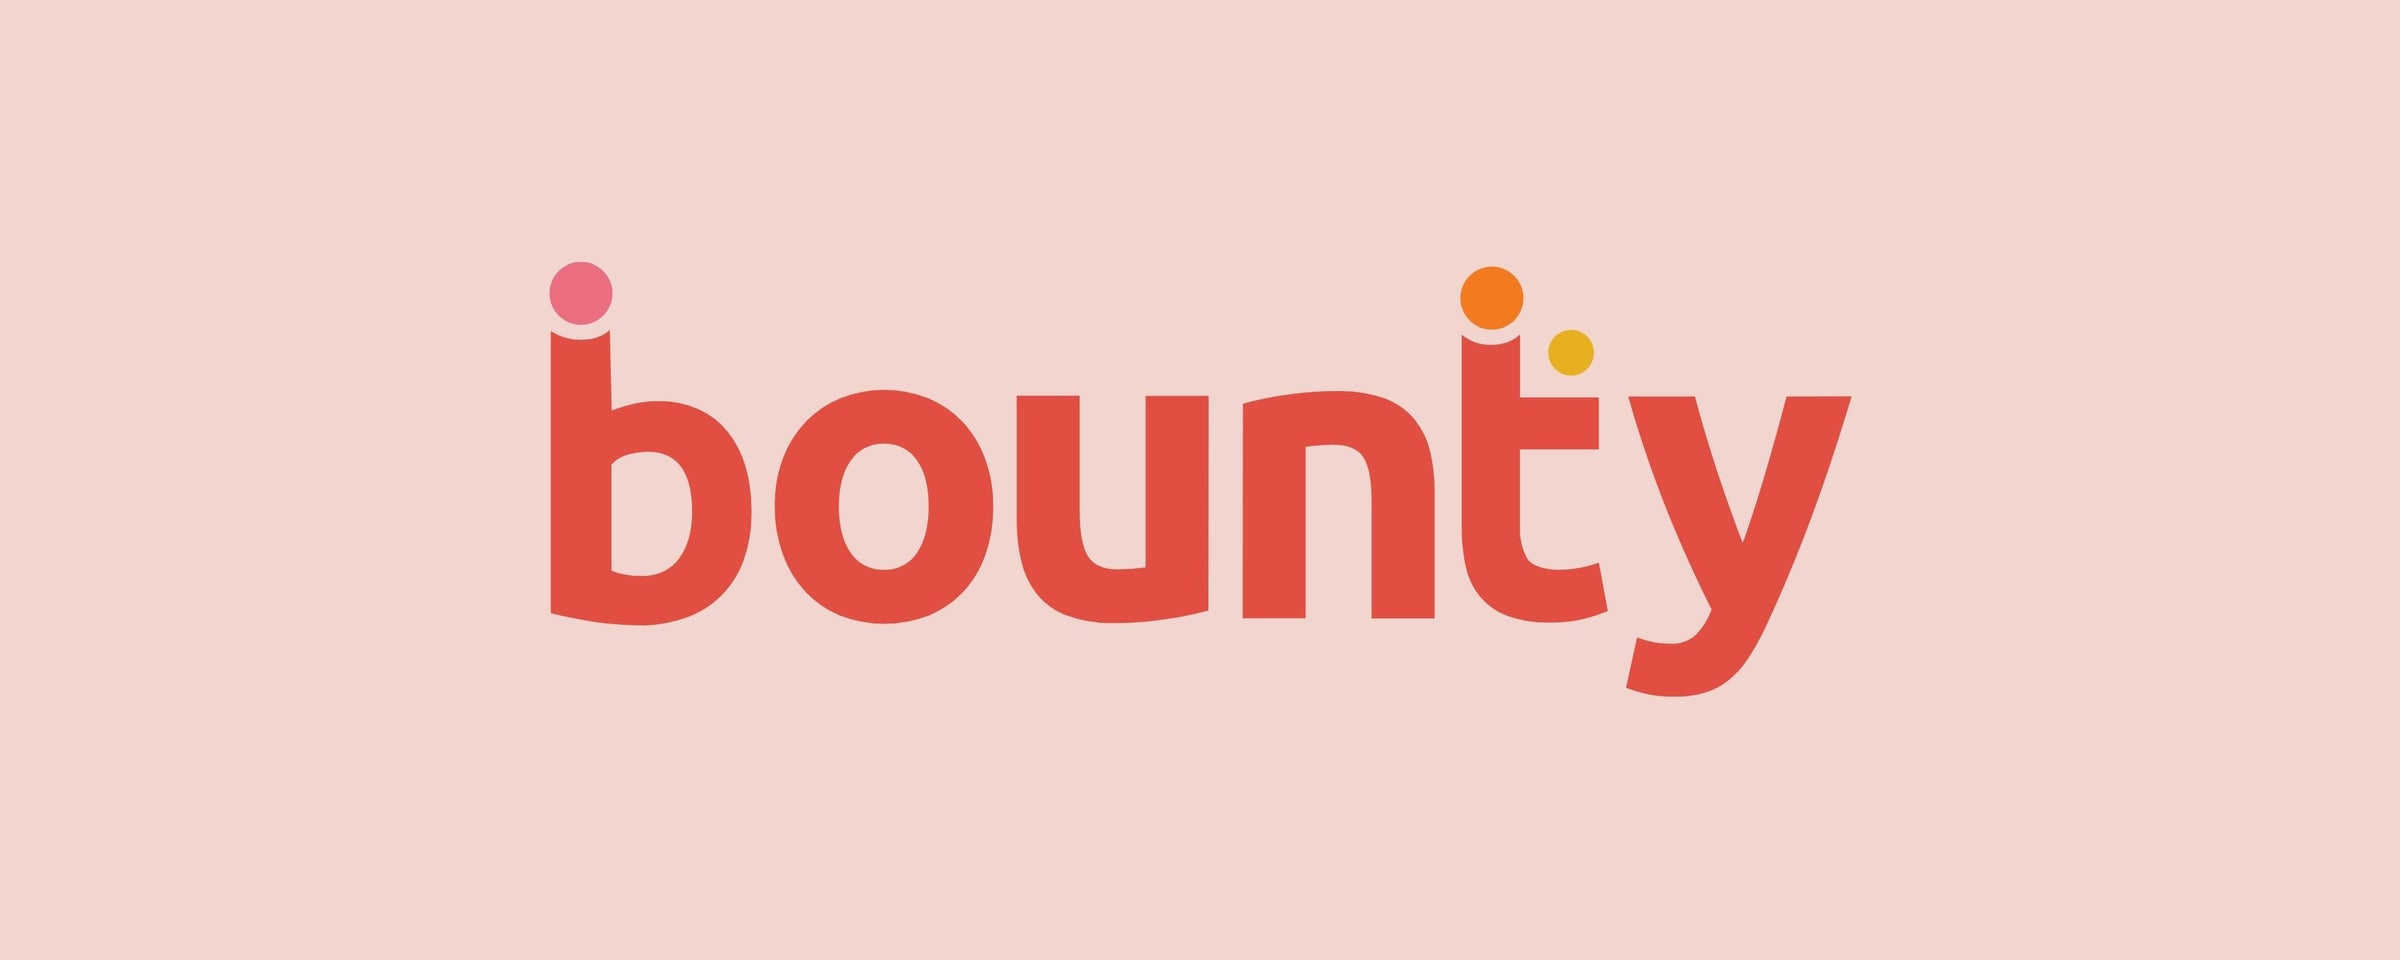 Bounty Parents showcase Lactamo’s Founder’s story in World Breastfeeding Week